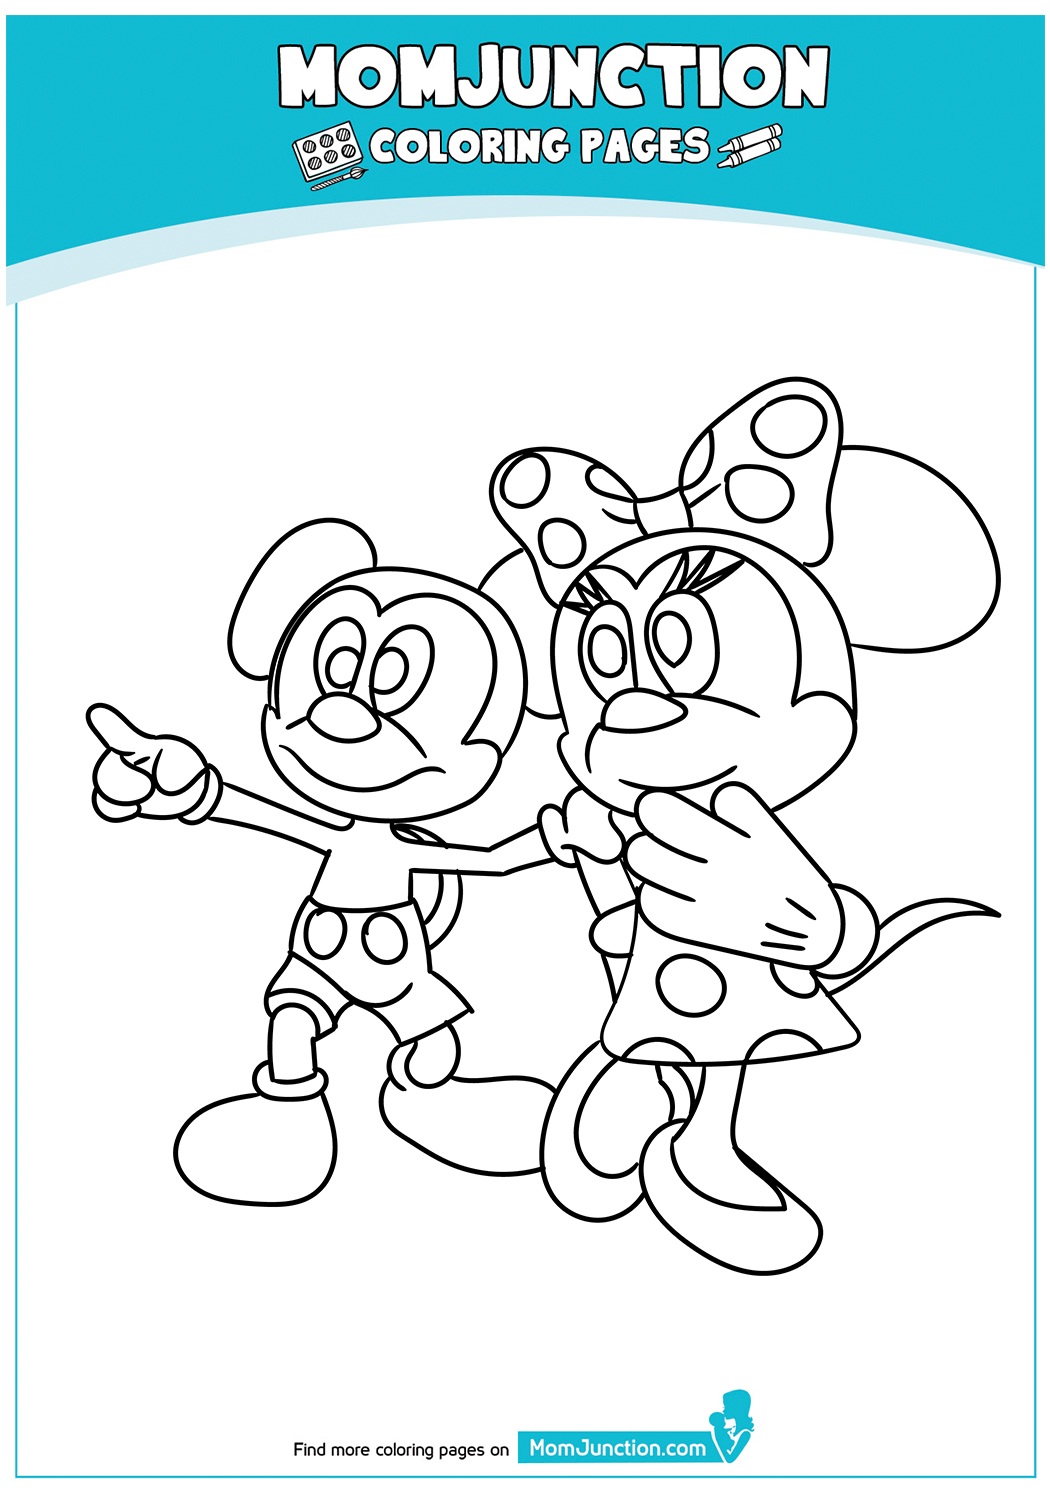 Mickey-Having-Fun-with-Minnie-17